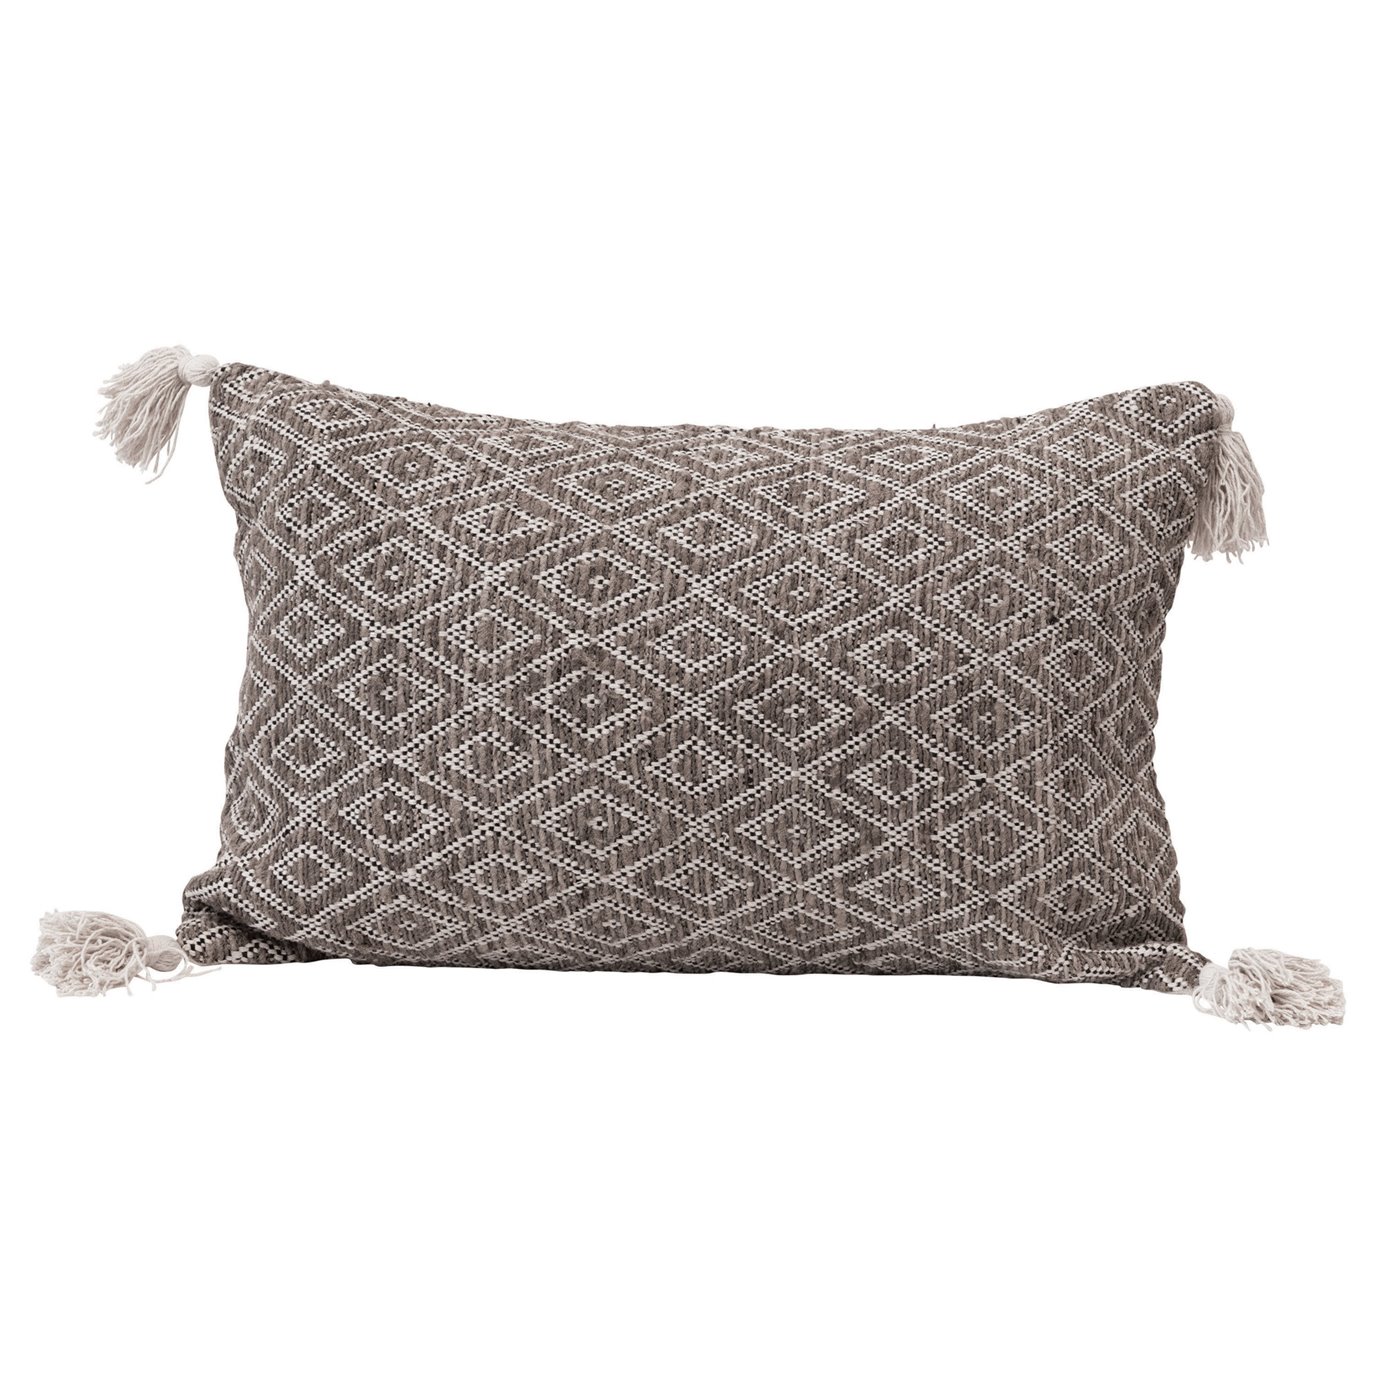 Cotton Woven Lumbar Pillow with Diamond Pattern & Tassels, Black, Cream & Tan Color